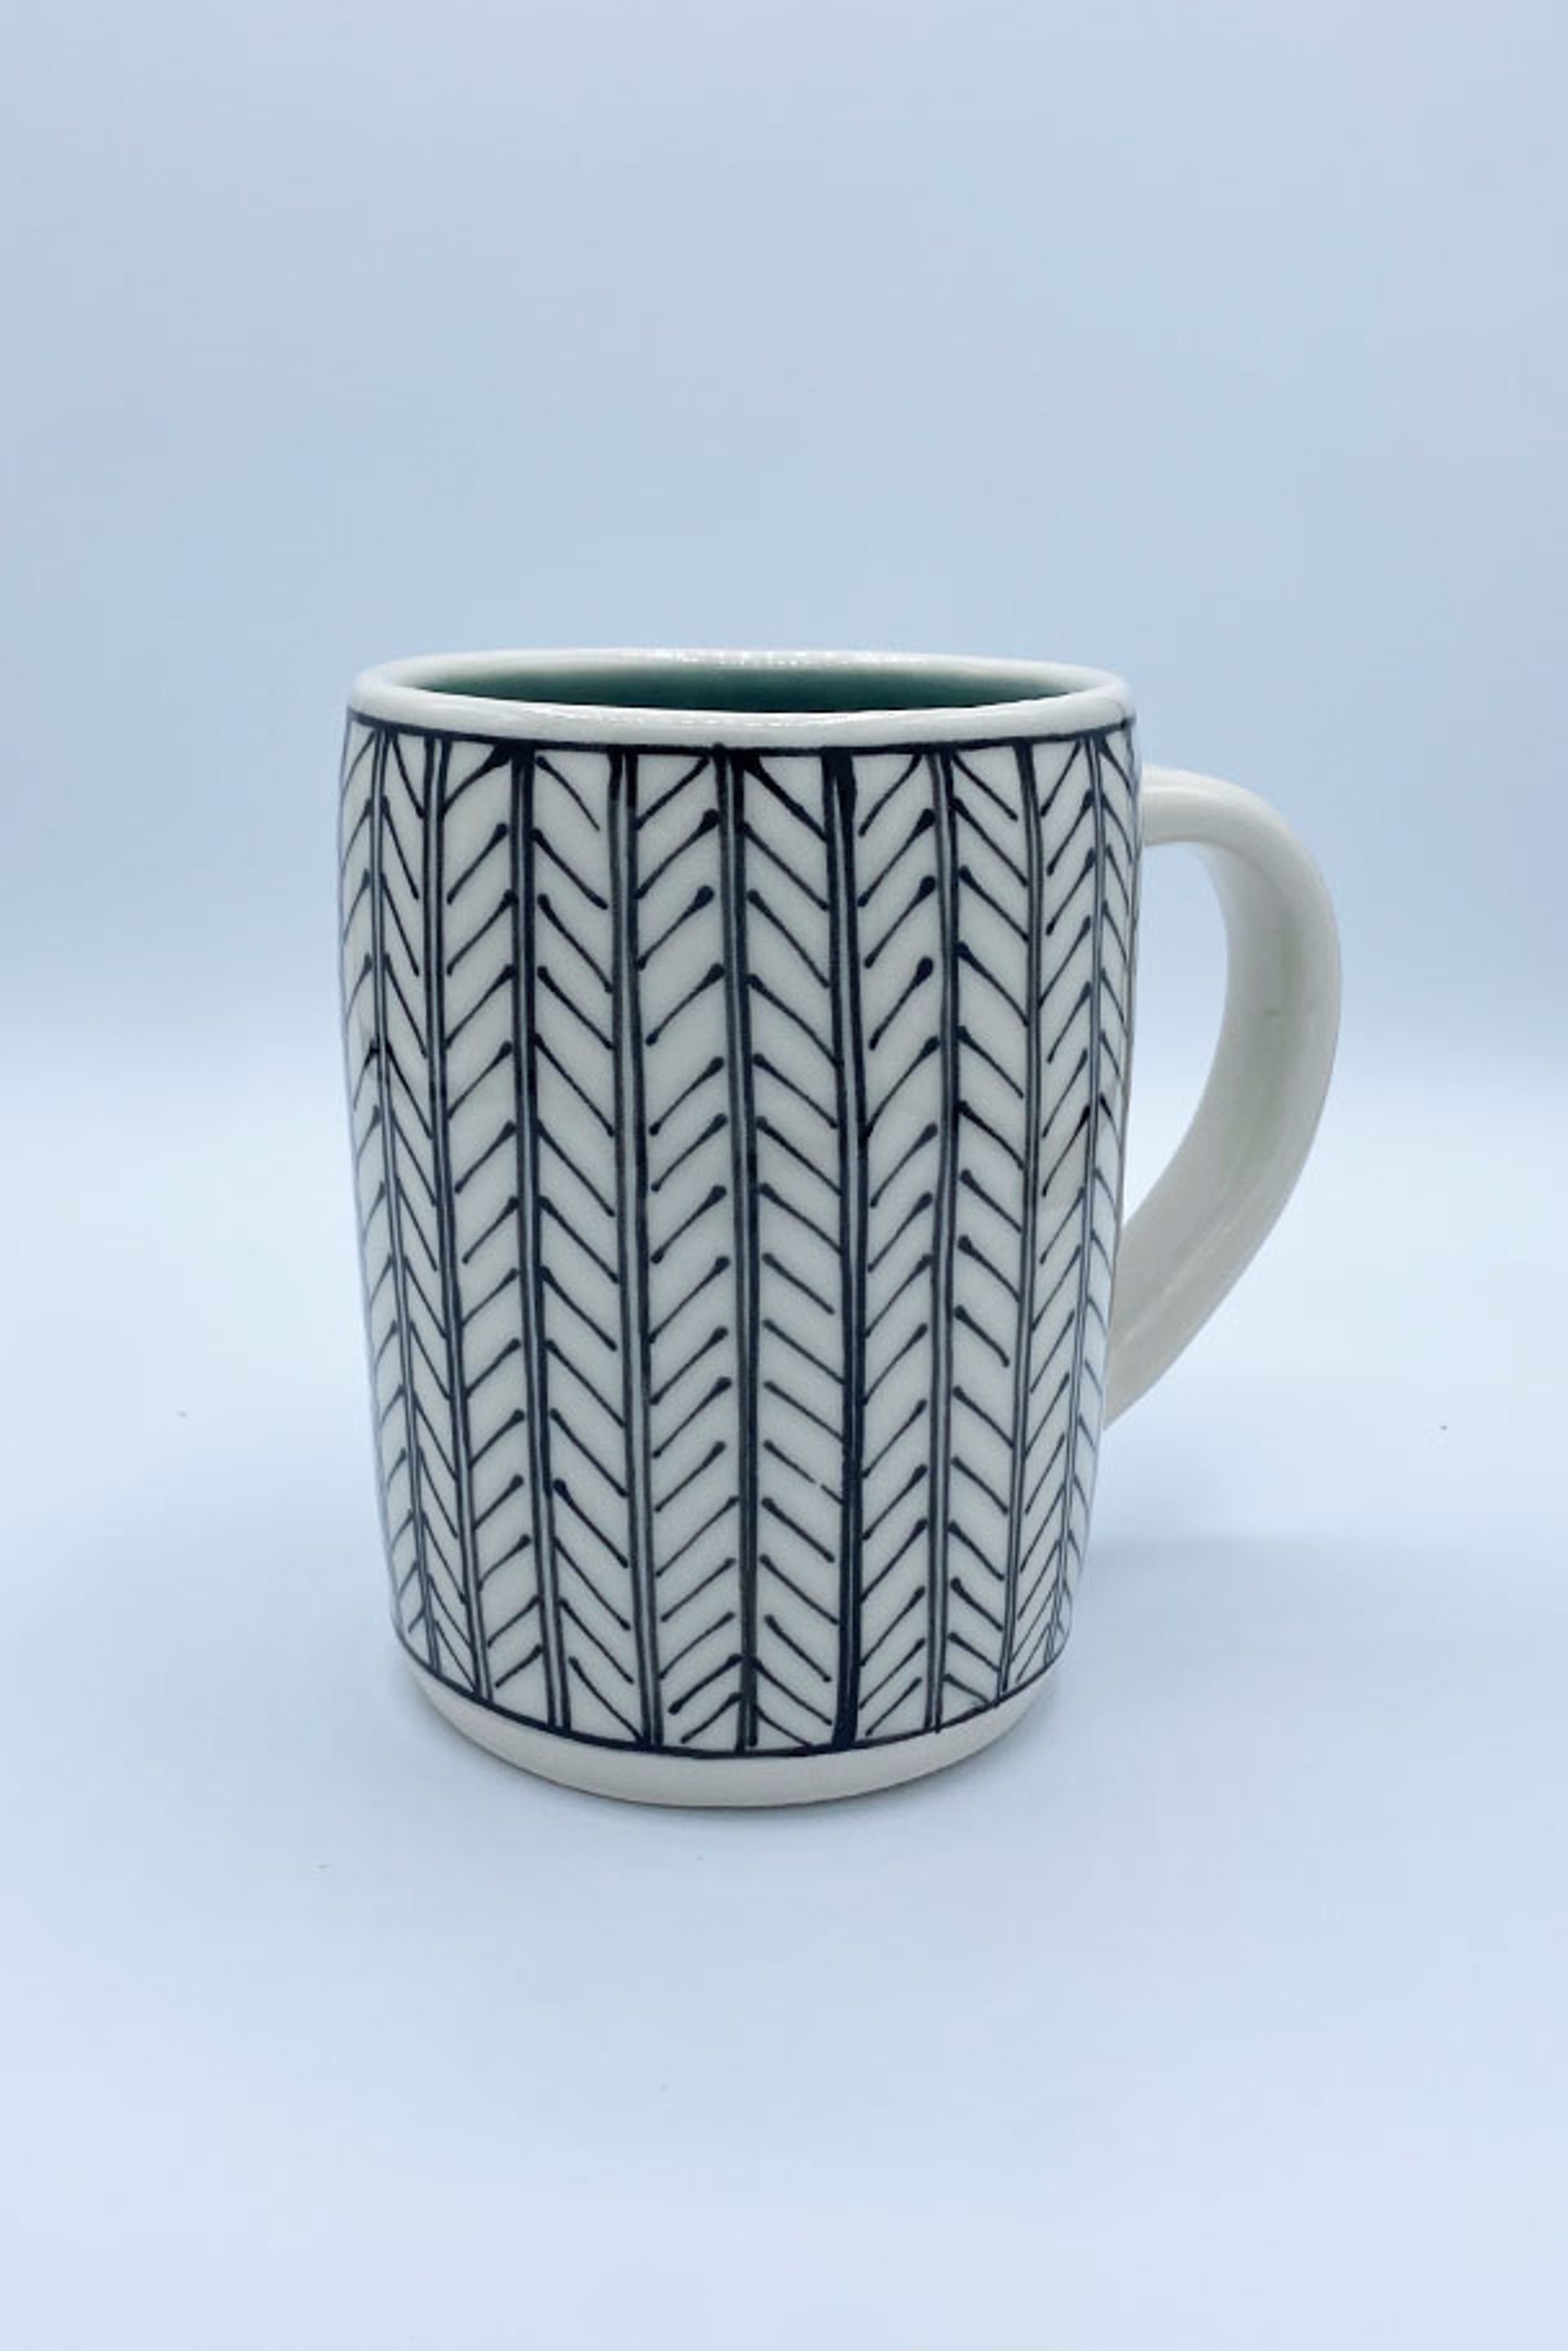 Mug 1 by Laura Cooke